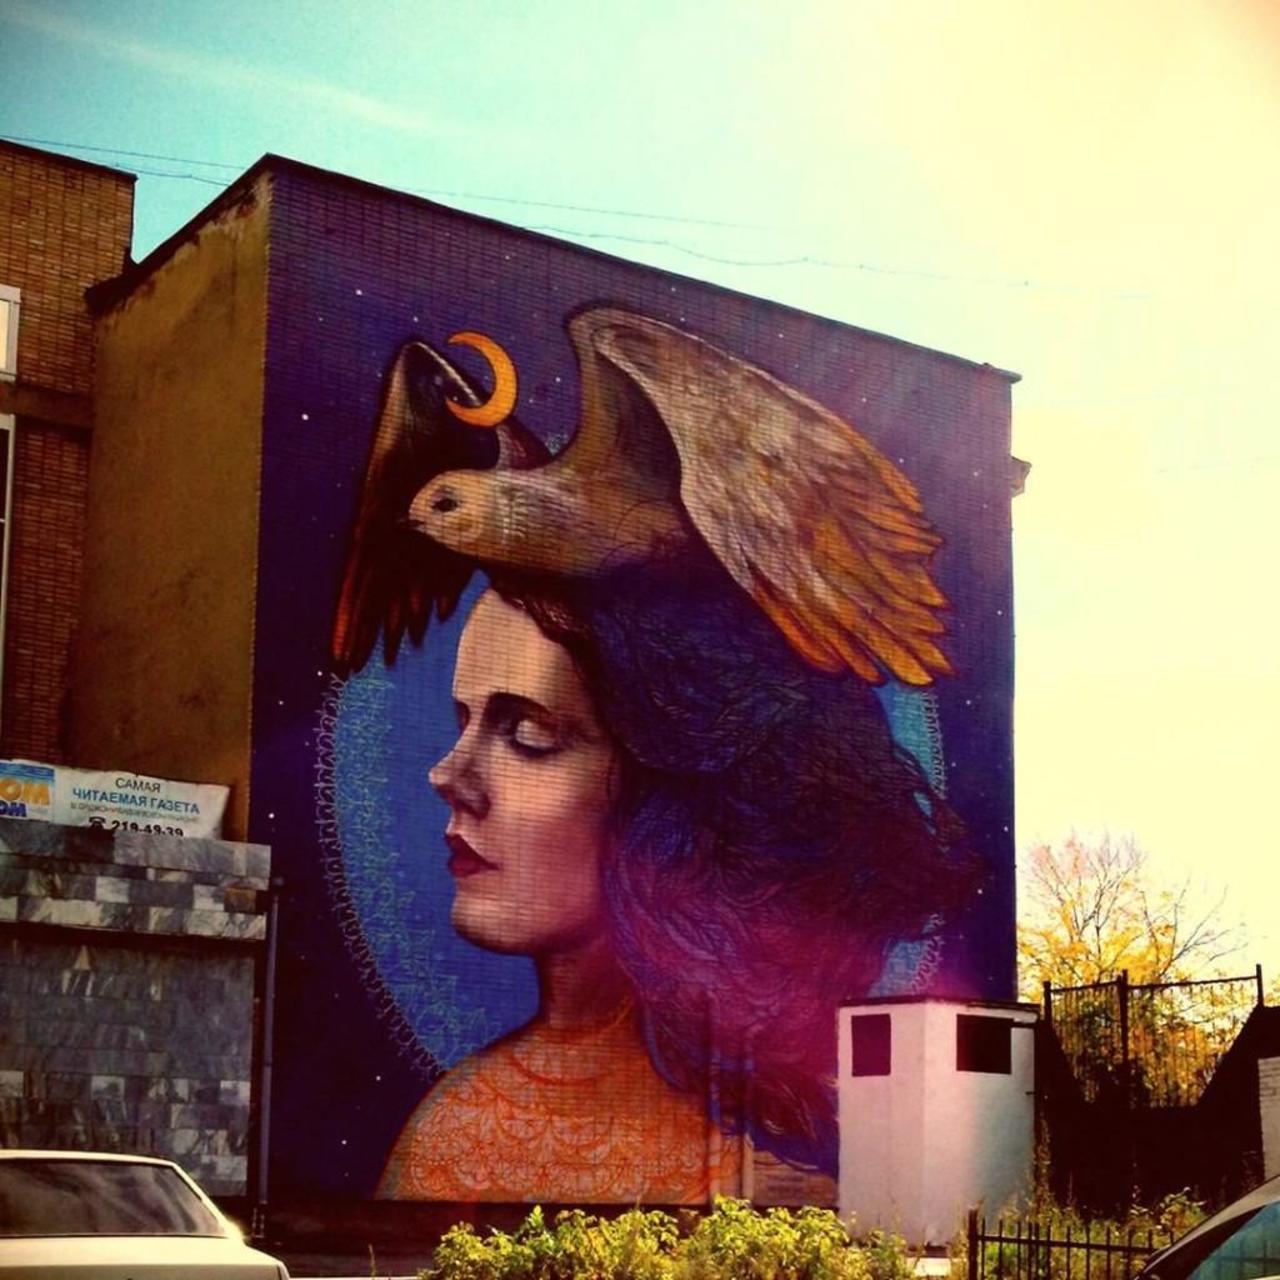 elenakataleya #streetart #graffiti #граффити #ekb #ekt #instagram #instagramrussia #inst ... - http://streetiam.com/elenakataleyastreetart-graffiti%d0%b3%d1%80%d0%b0%d1%84%d1%84%d0%b8%d1%82%d0%b8-ekb-ekt-instagraminstagramrussia-instapic-photooftheday/ http://t.co/OX4VR3xpYI